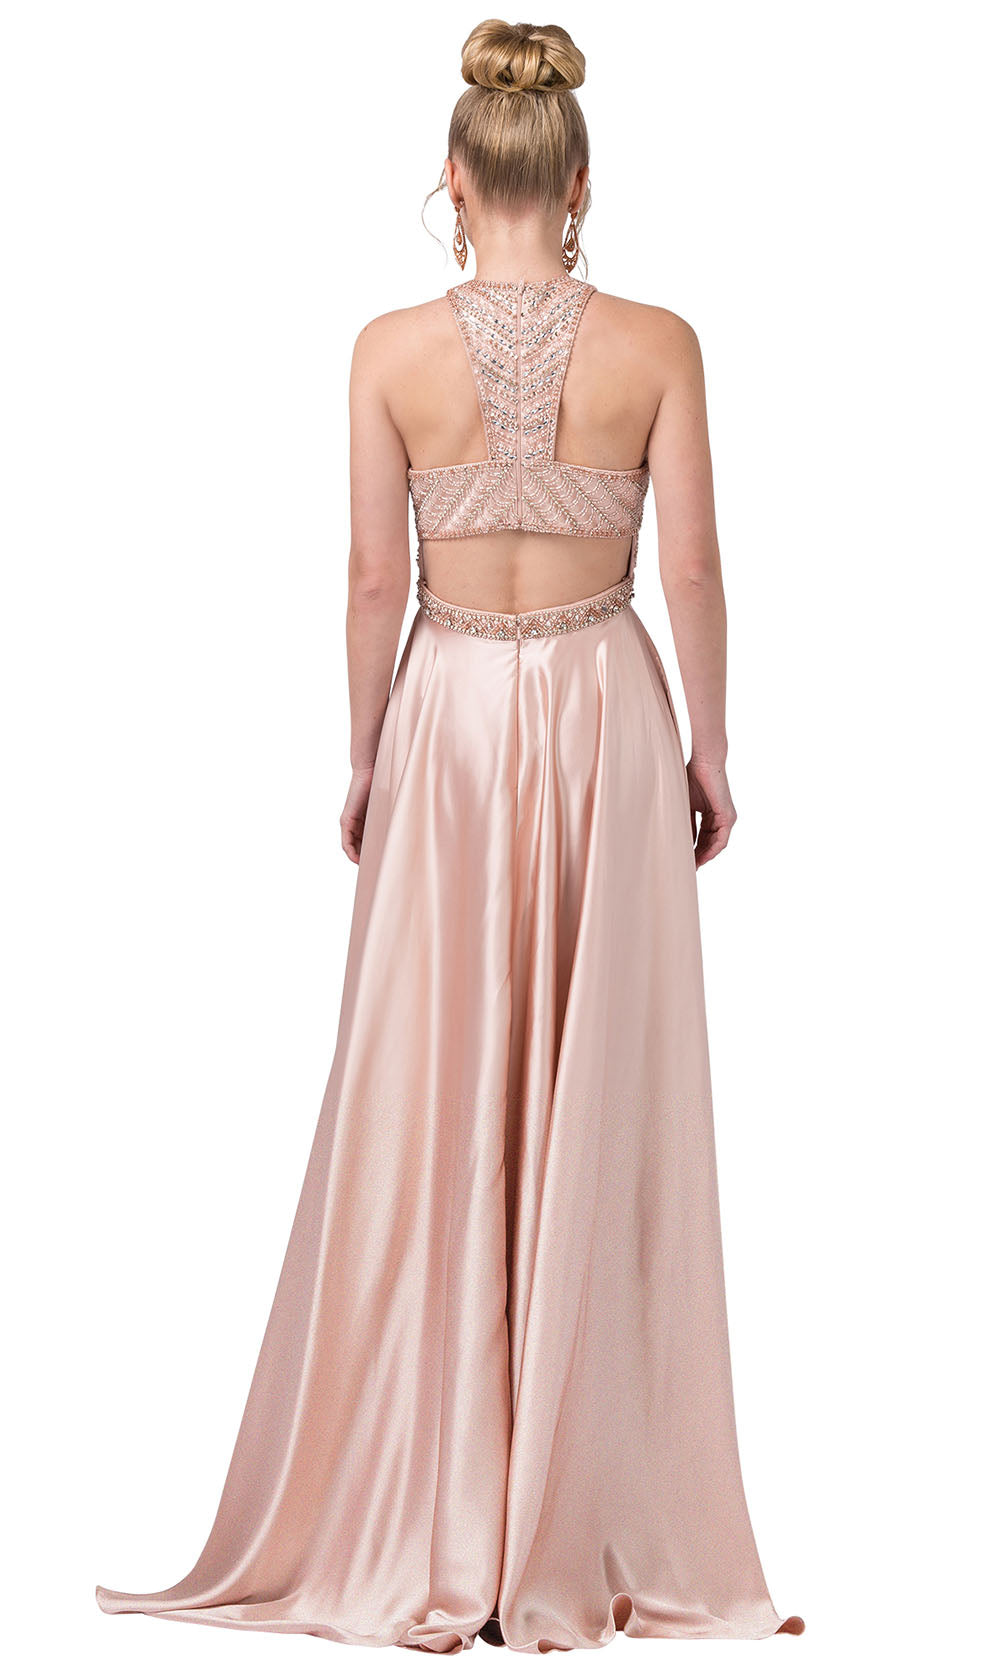 Dancing Queen - 2518 Embellished Halter Neck A-Line Gown In Pink